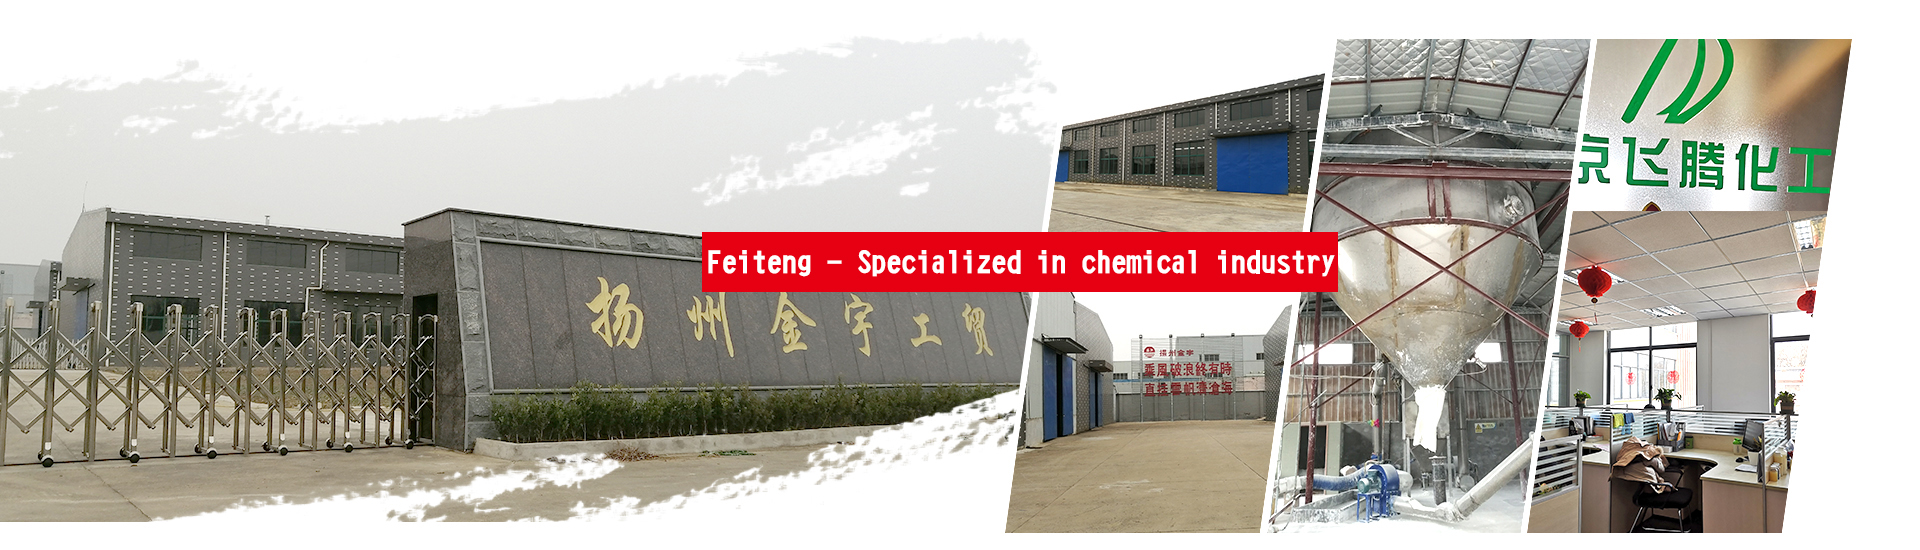 Nanjing Feiteng Chemical Co., L